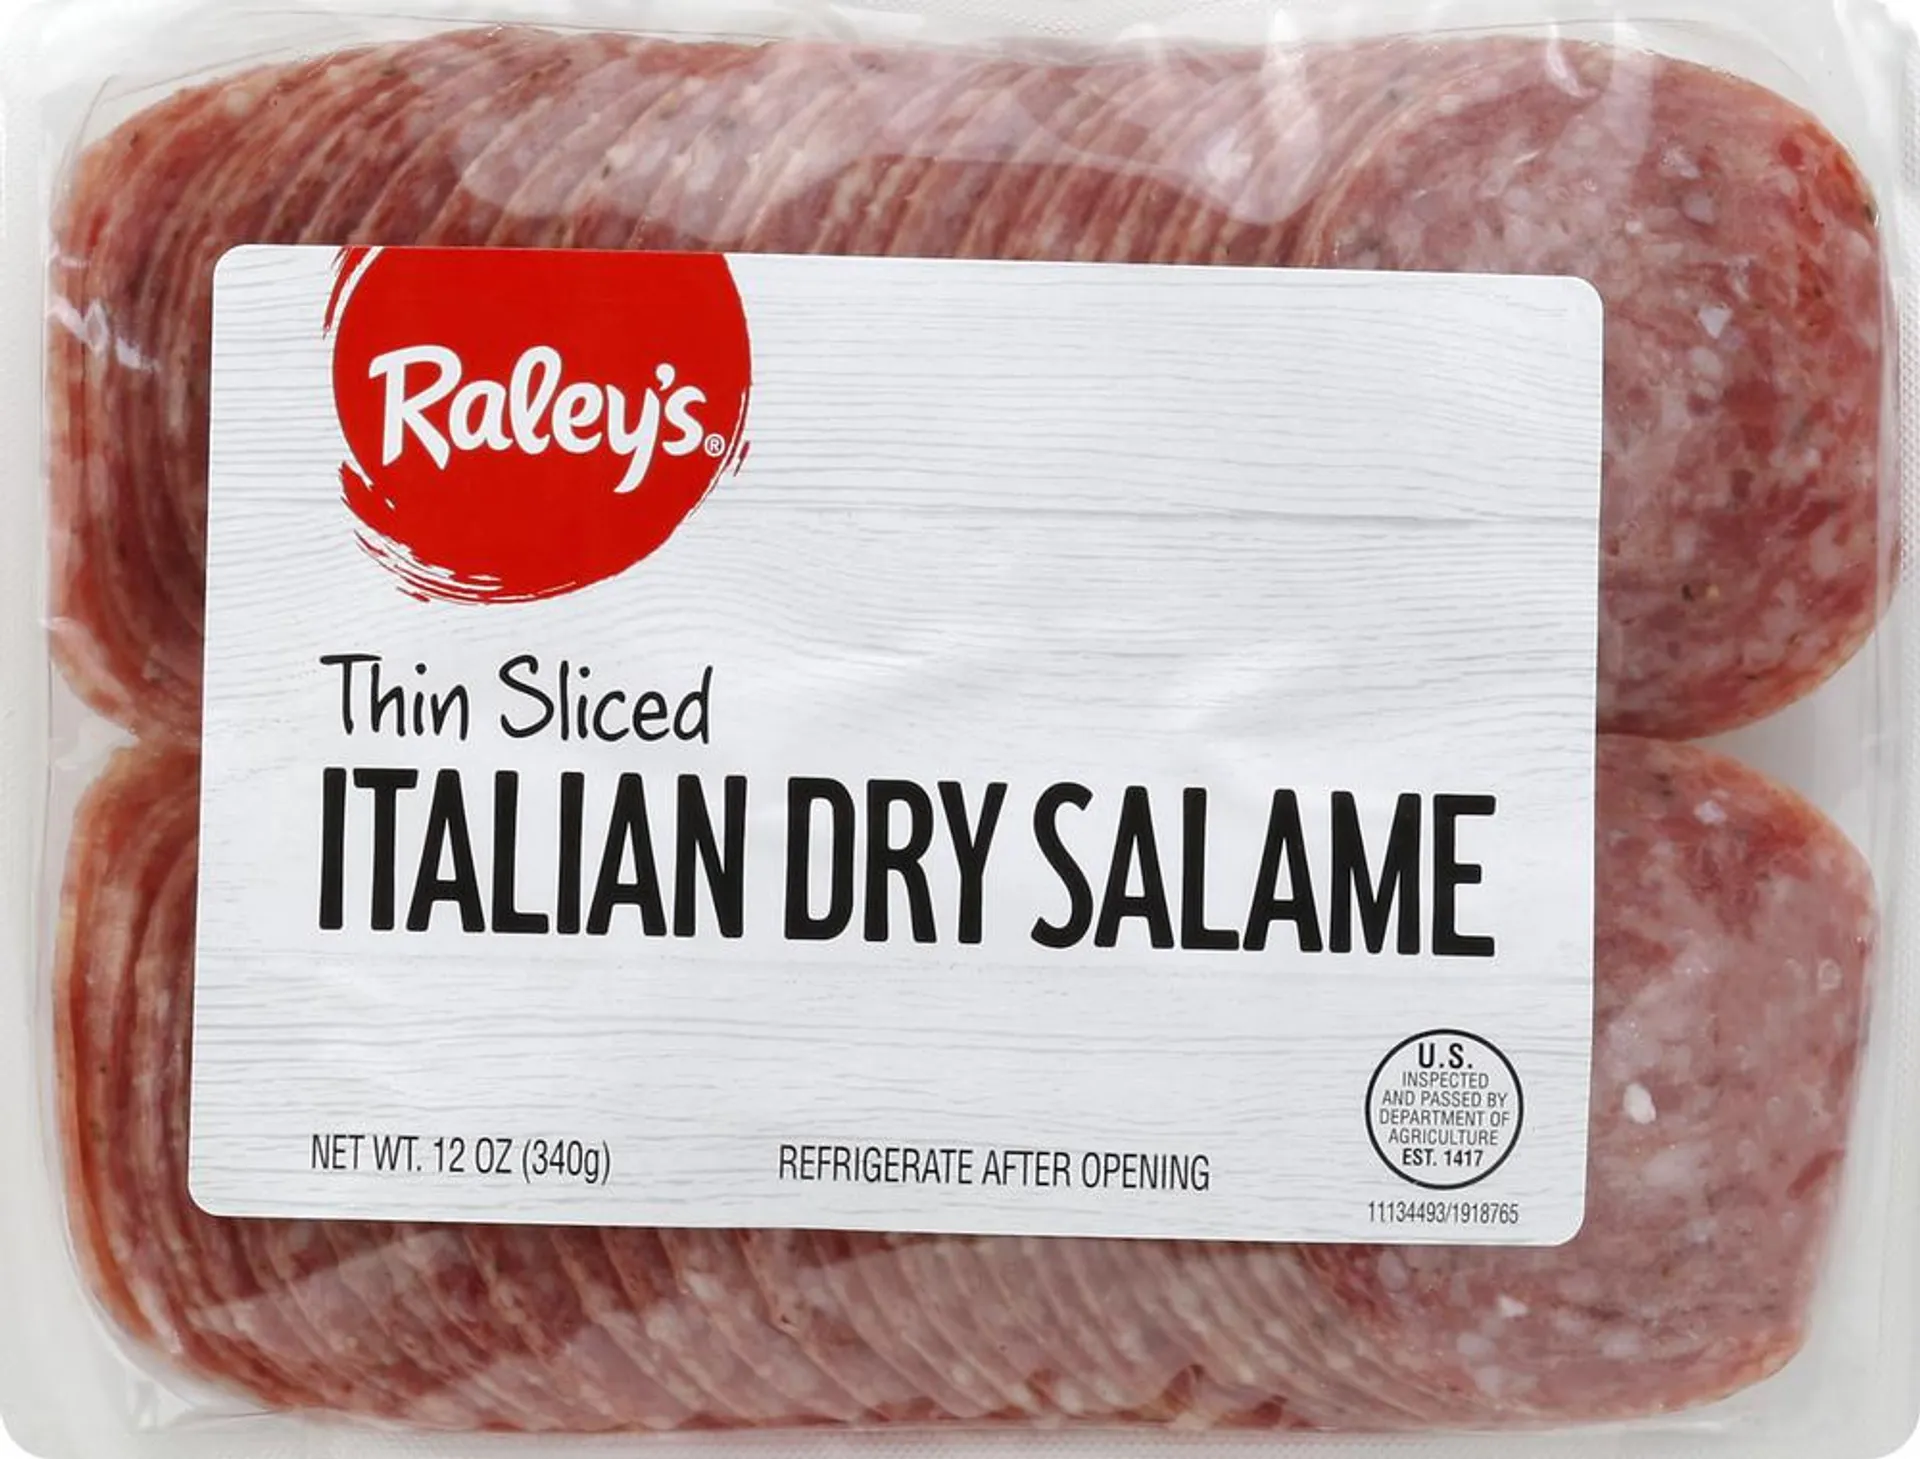 Raley's Thin Sliced Italian Dry Salame